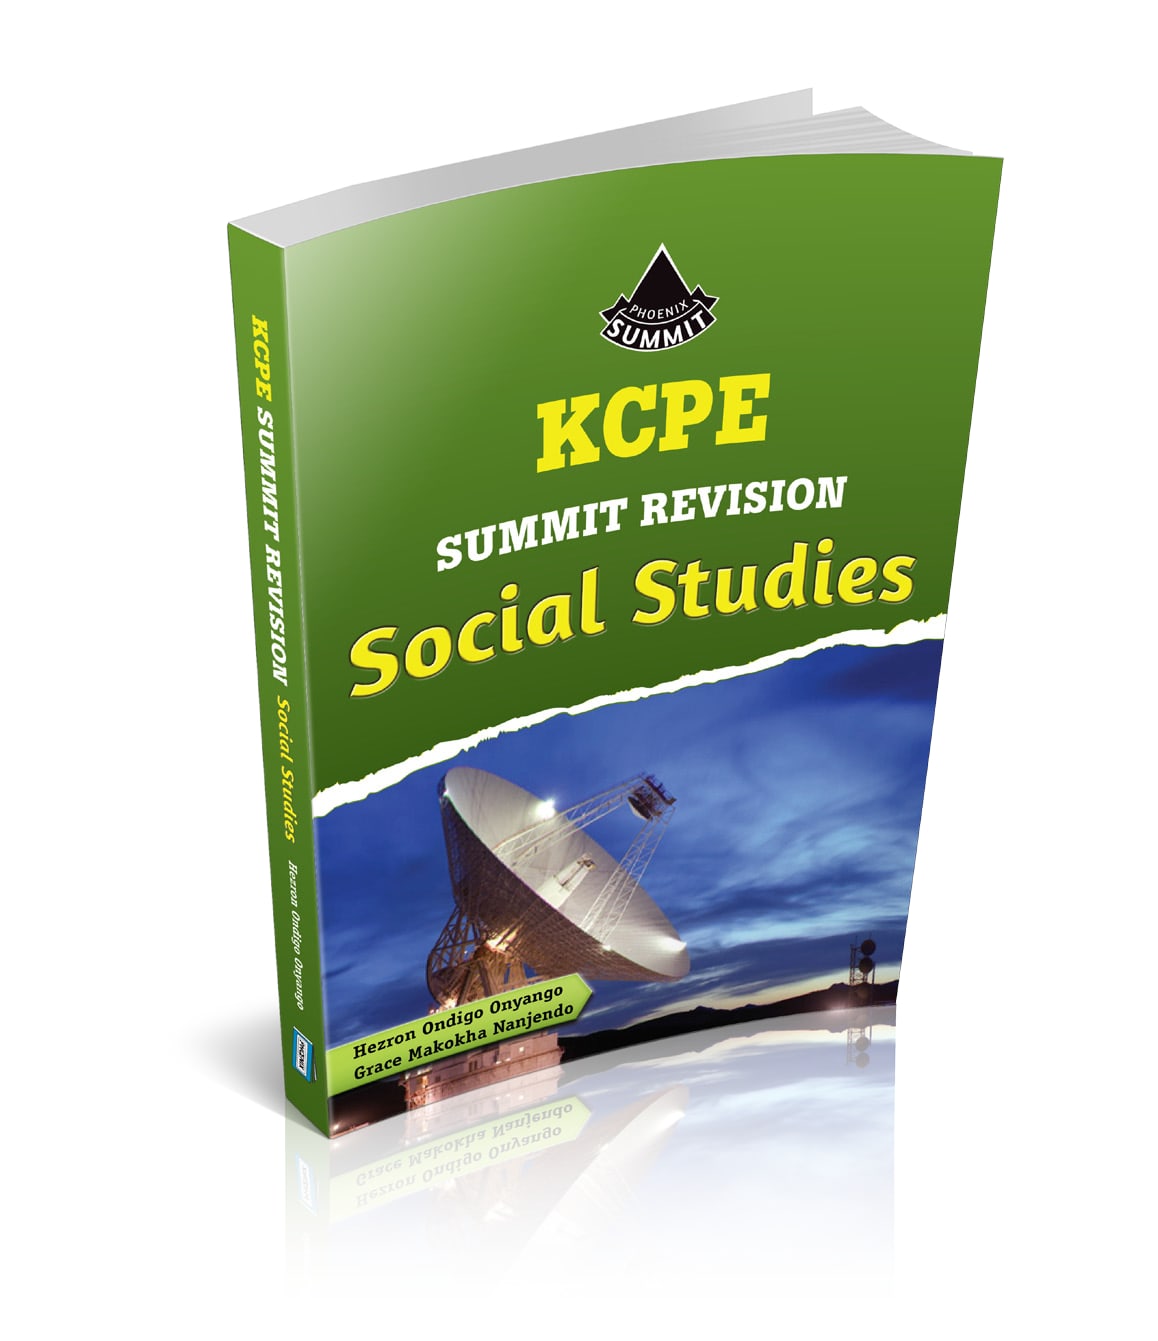 KCPE Summit Revision Social Studies